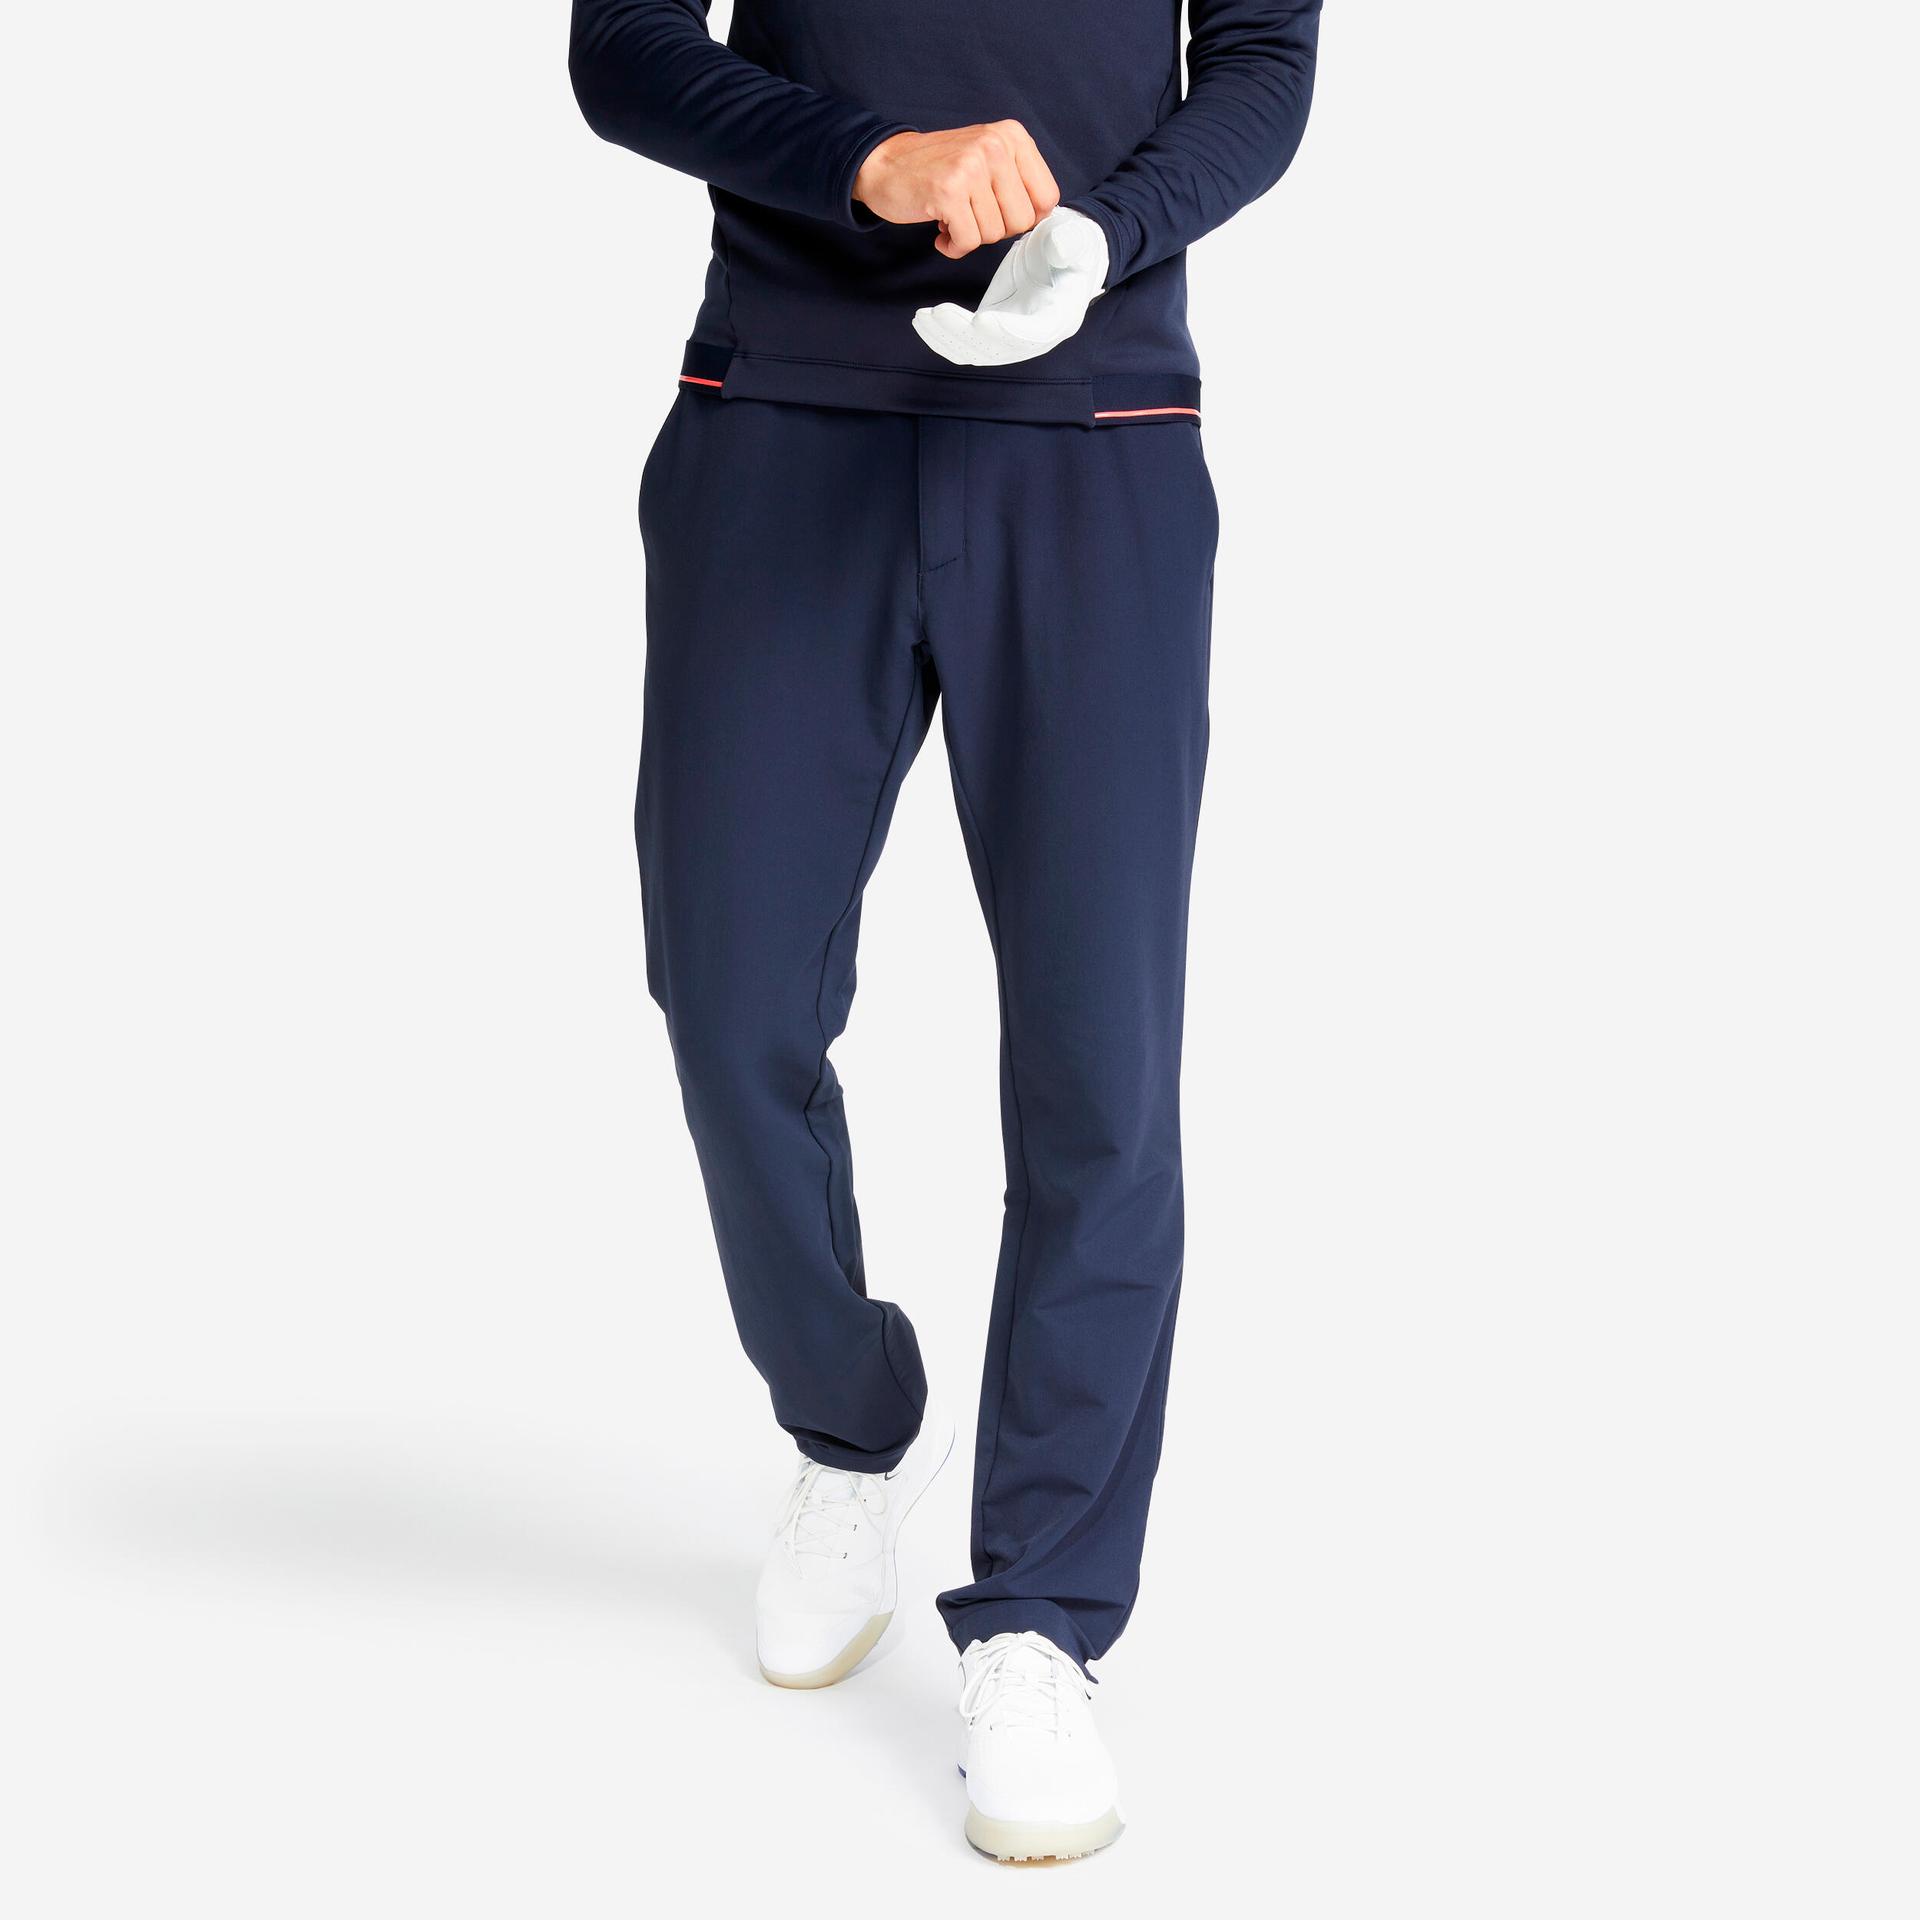 men's-golf-winter-trousers-cw500-navy-blue